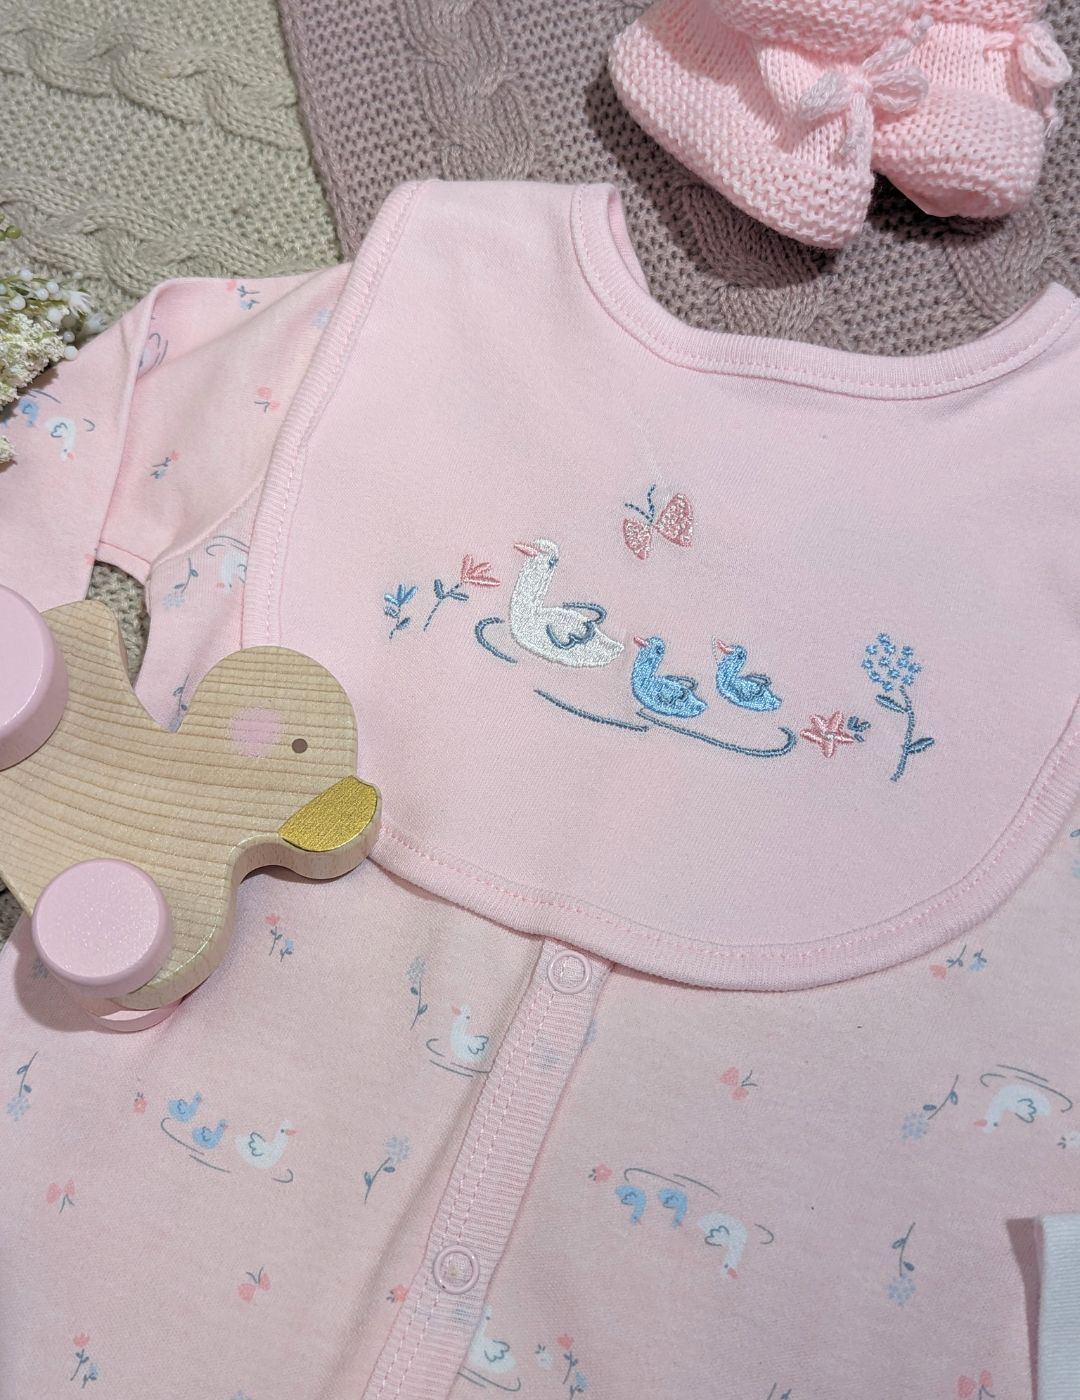 baby girl clothing set gift pink